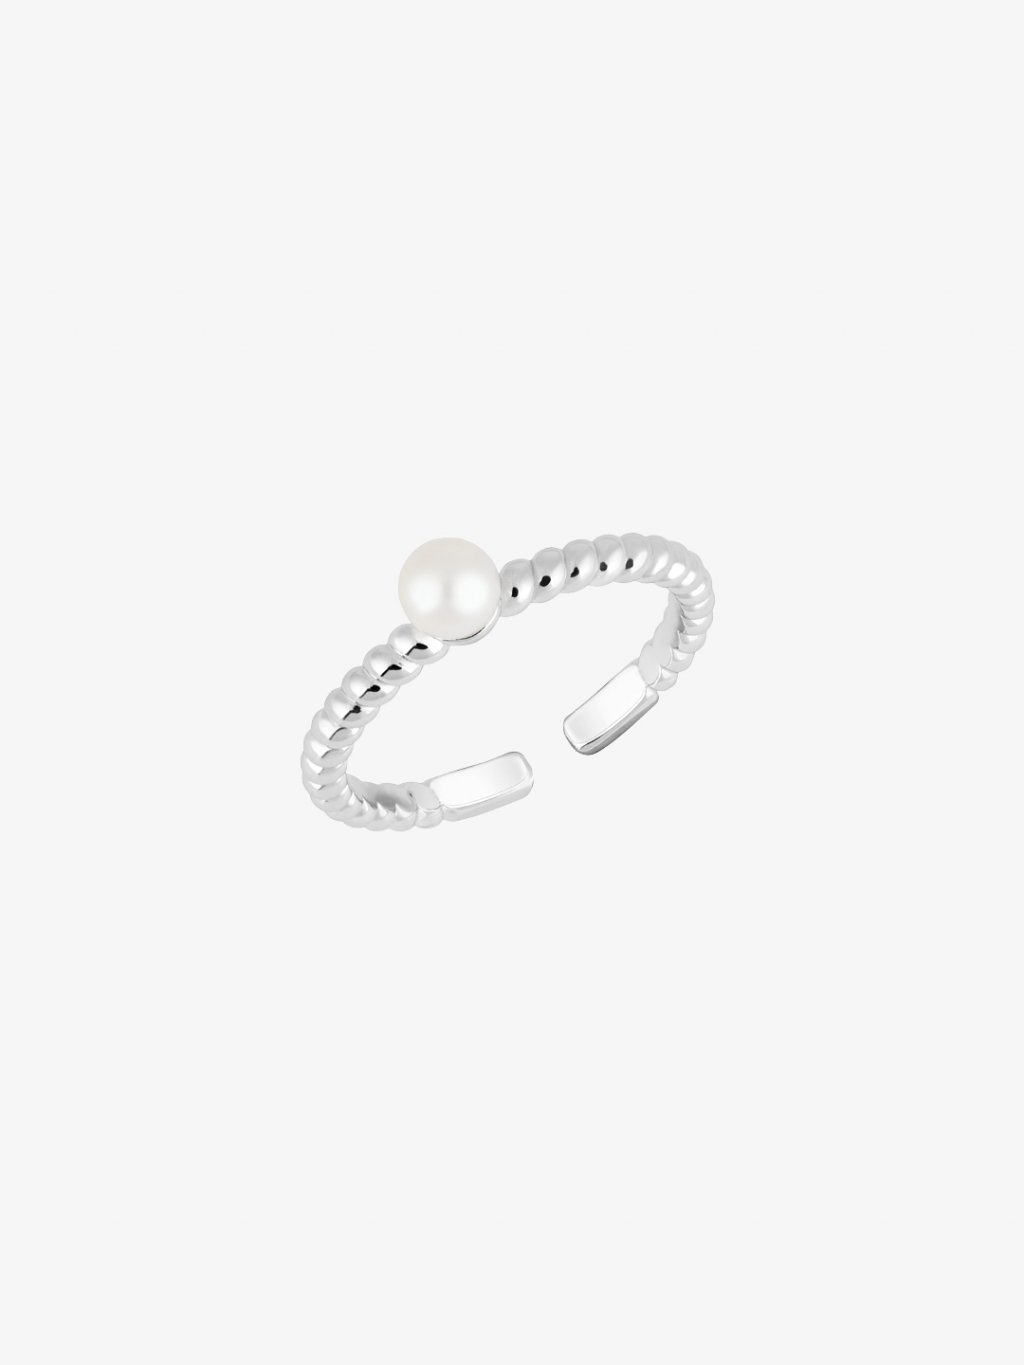 Stříbrný prsten Pearl Passion s říční perlou Preciosa 6158 01B Velikost a váha prstenu: 56-60